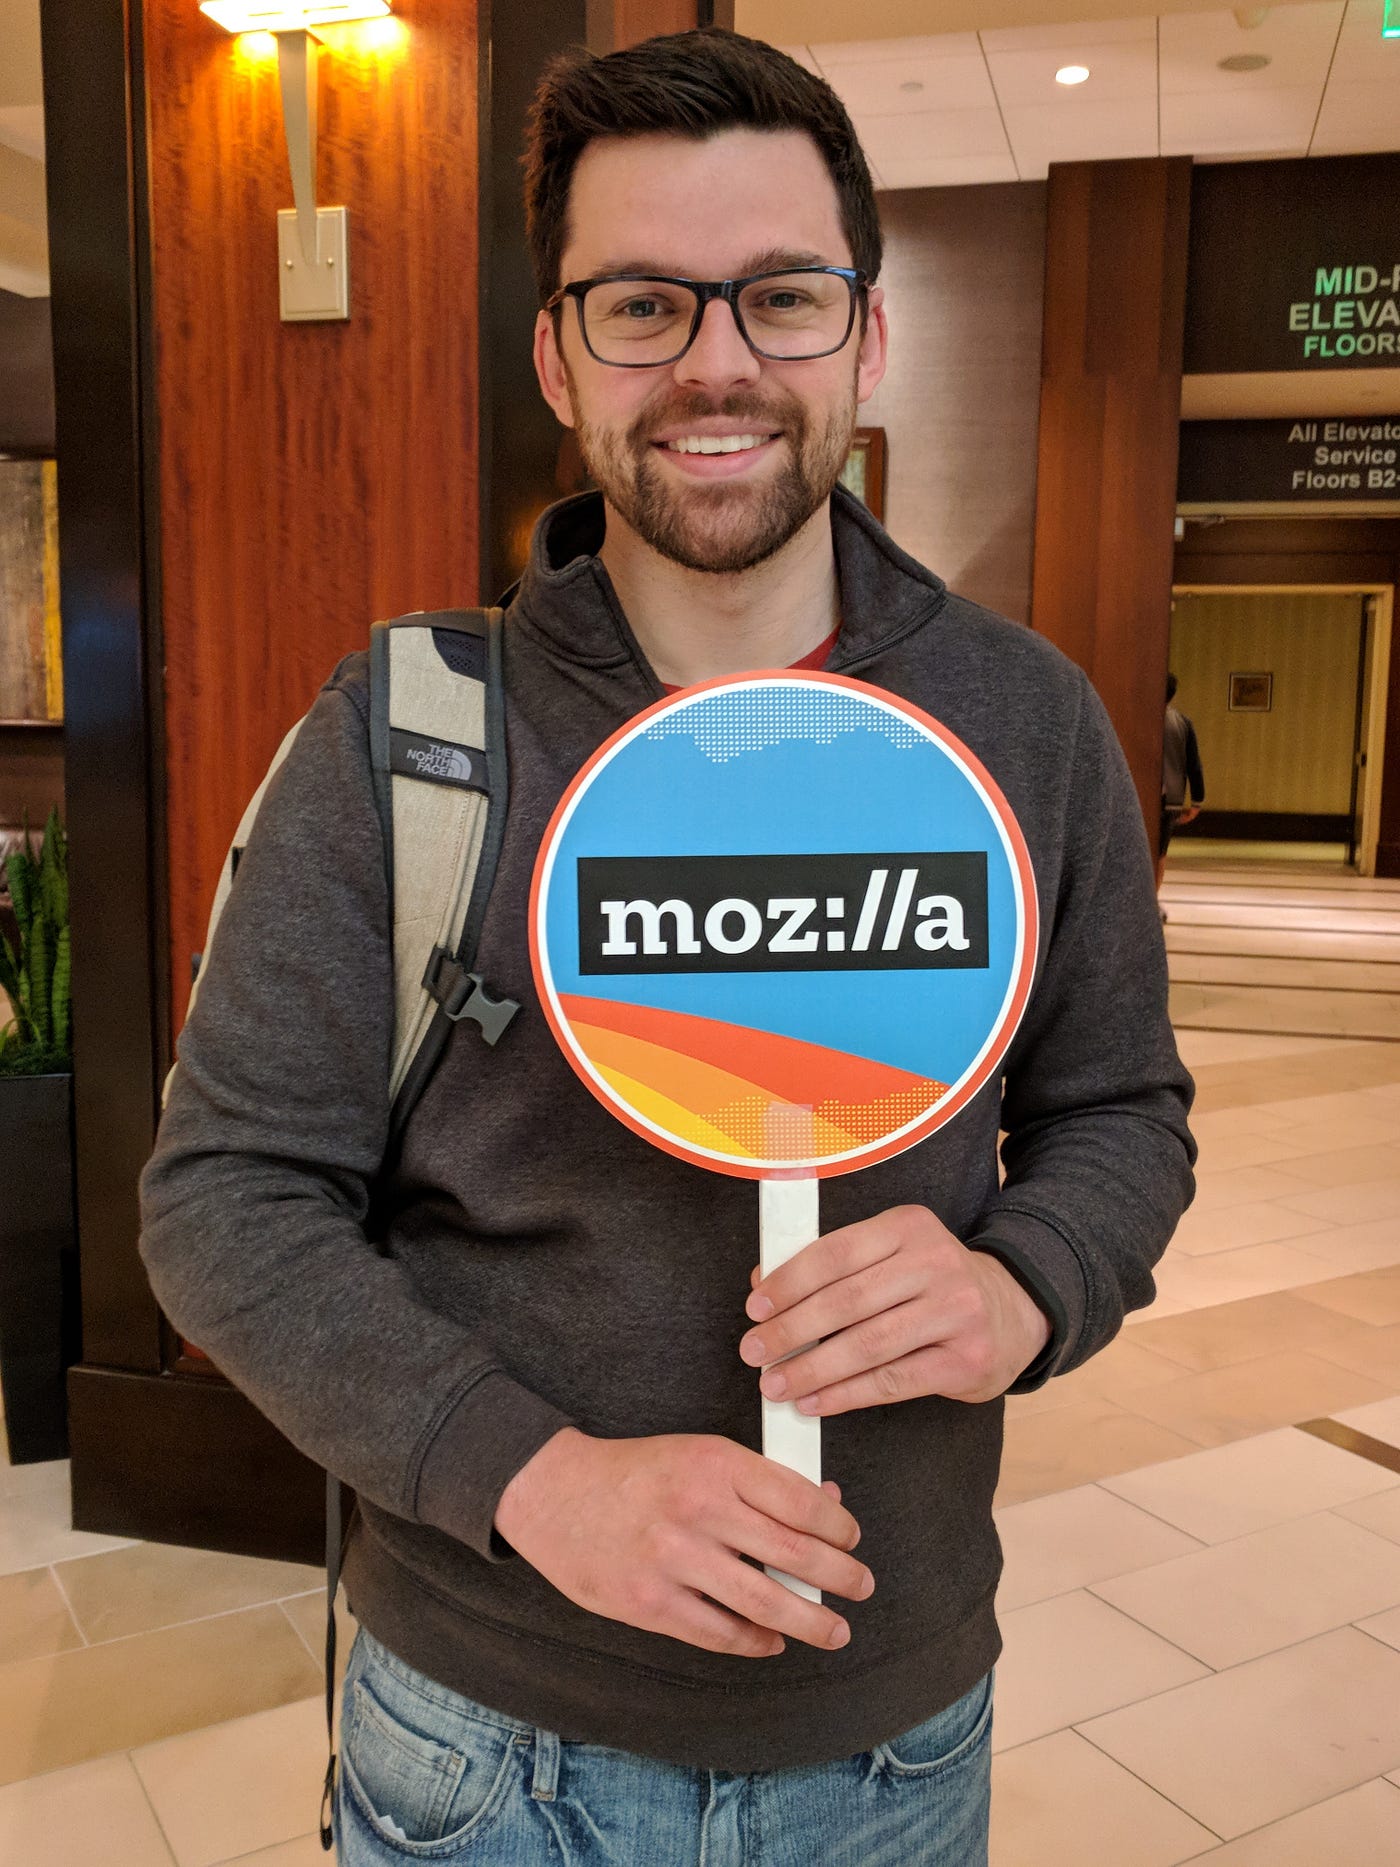 John Karahalis holding a sign with the Mozilla logo on it